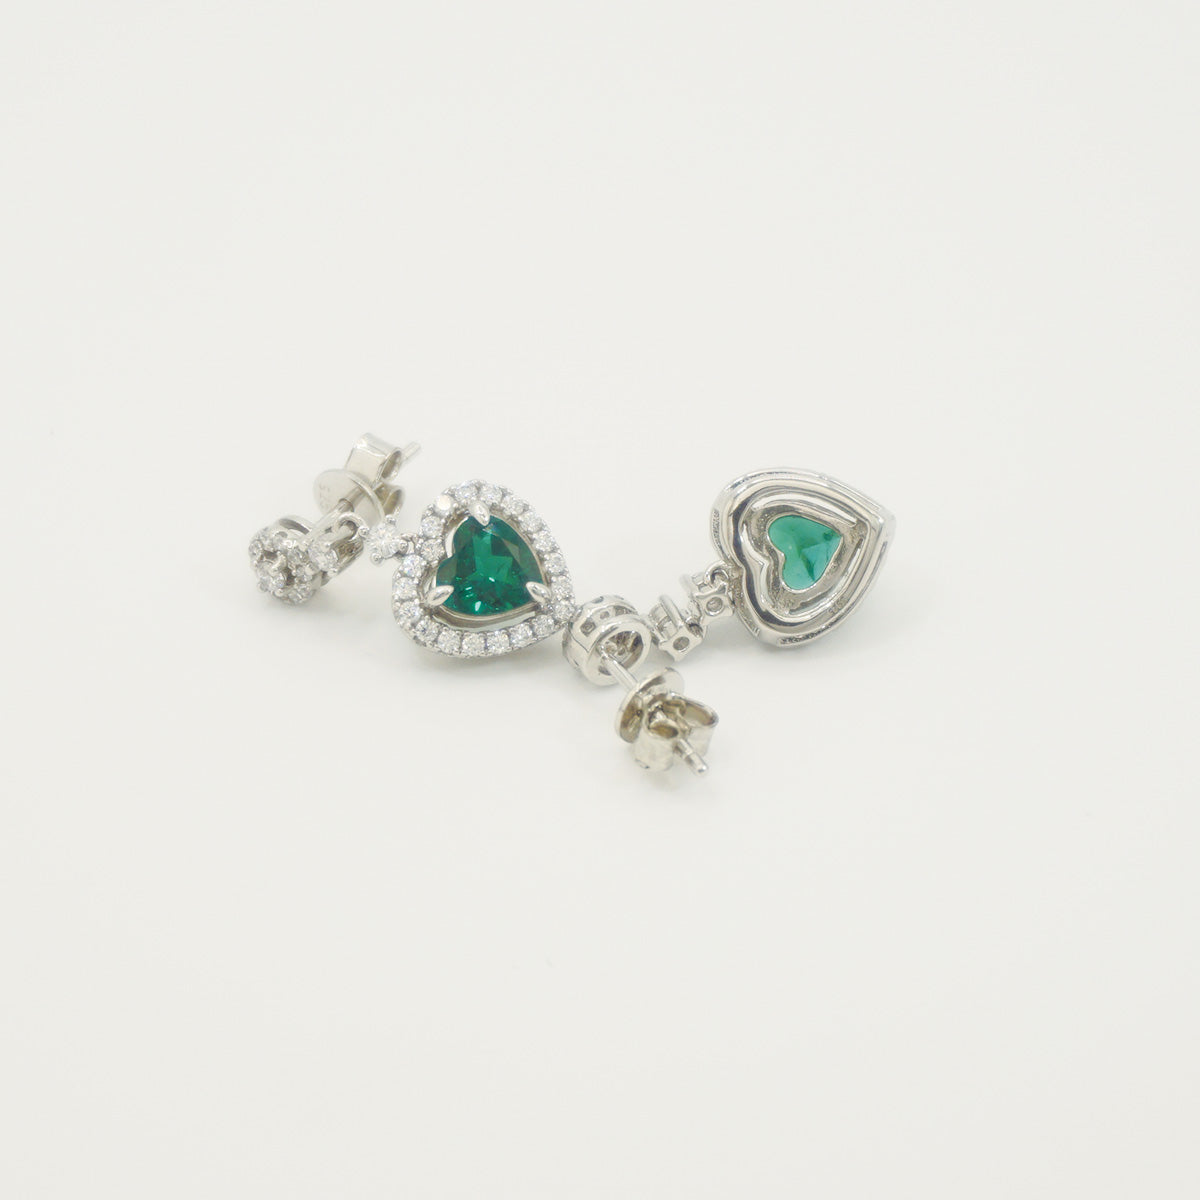 White Gold Heart Emerald with Worldwide Setting Stones Drop Earrings for Women